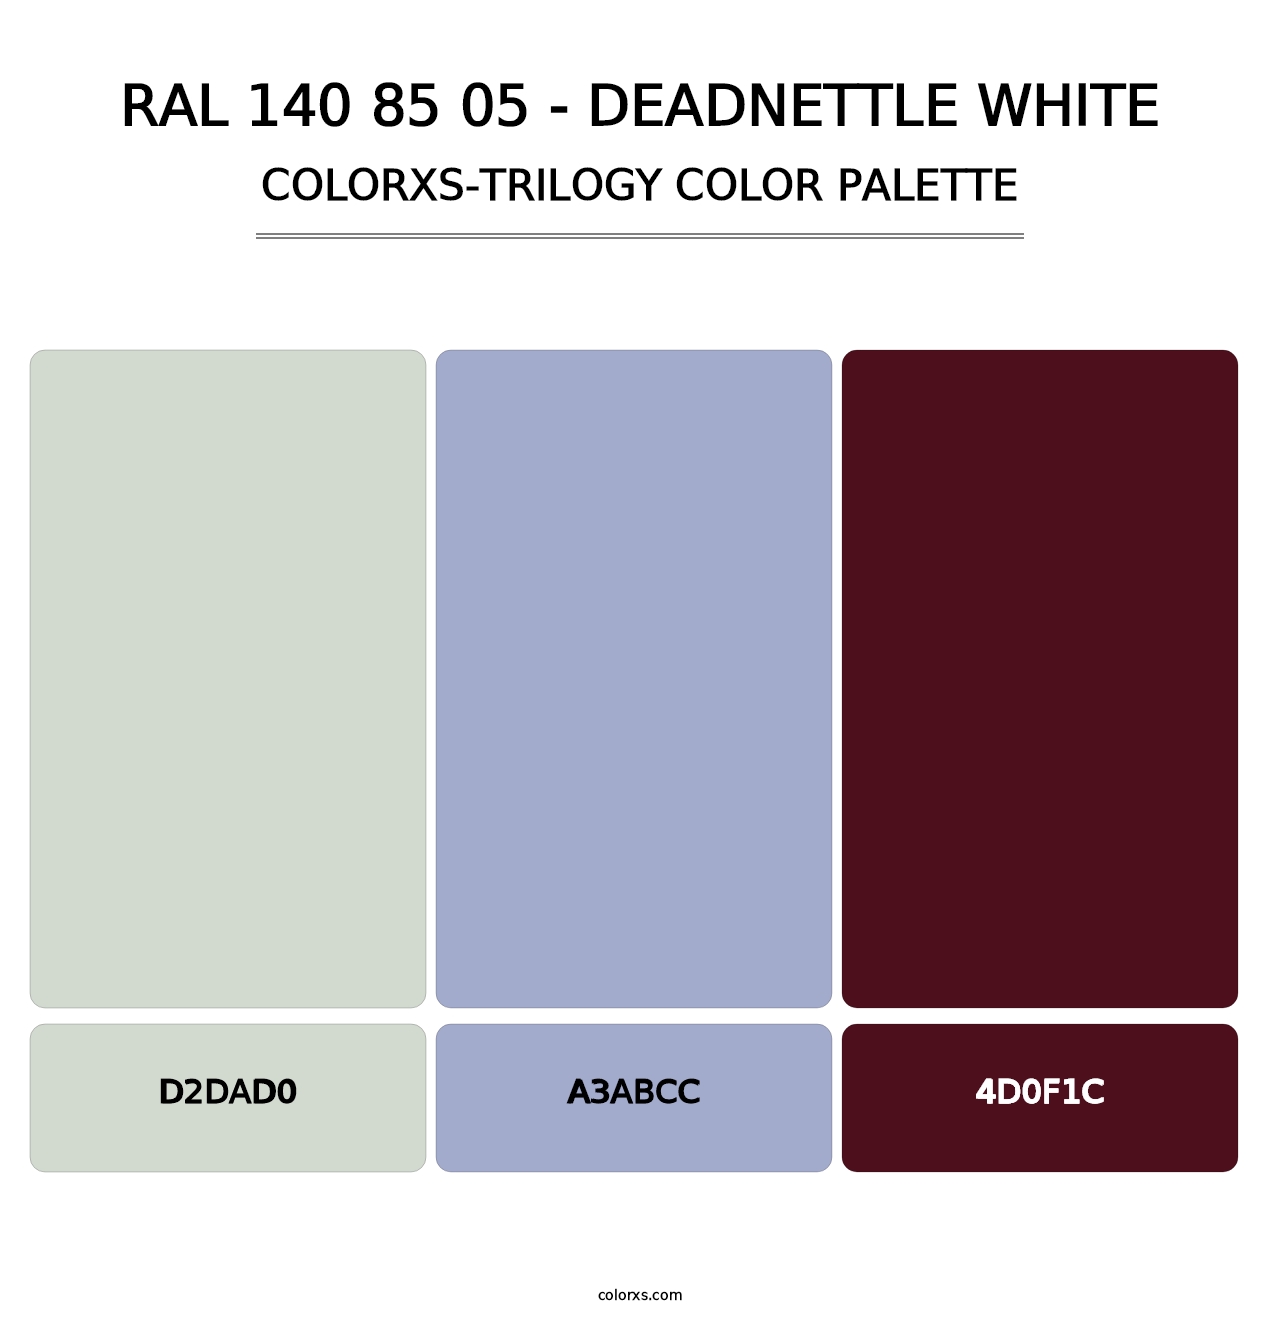 RAL 140 85 05 - Deadnettle White - Colorxs Trilogy Palette